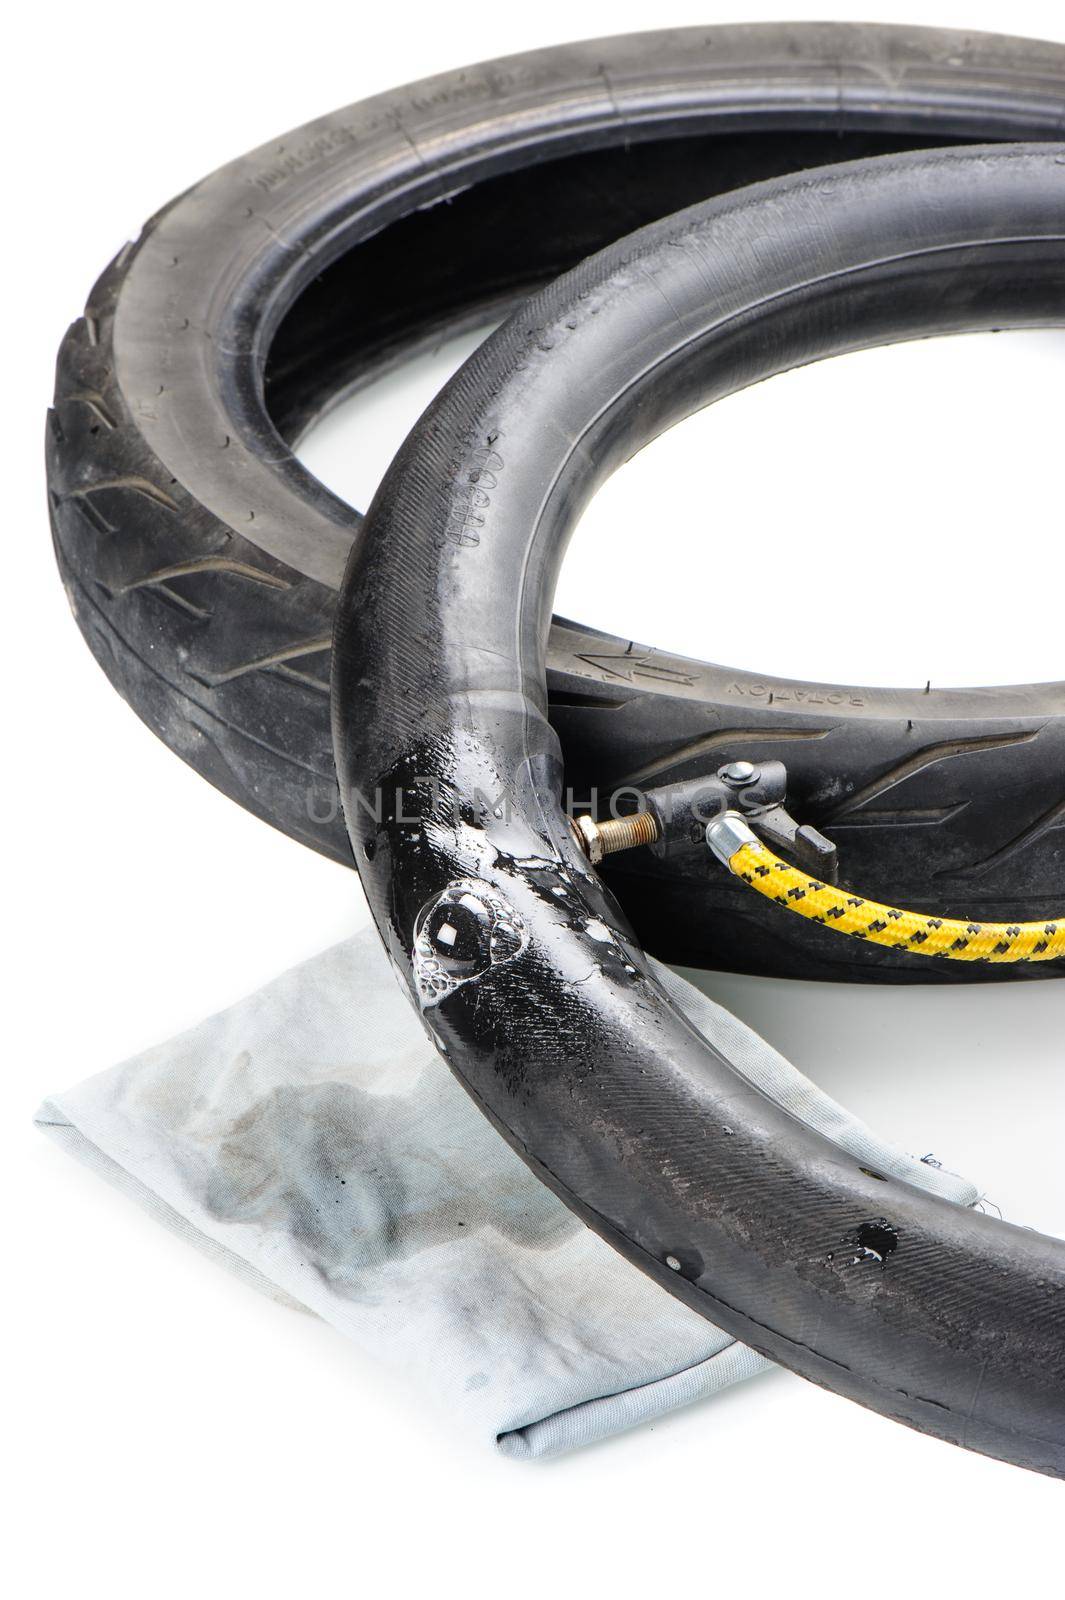 checking damaged inner tire tube, damaged motorbike tire